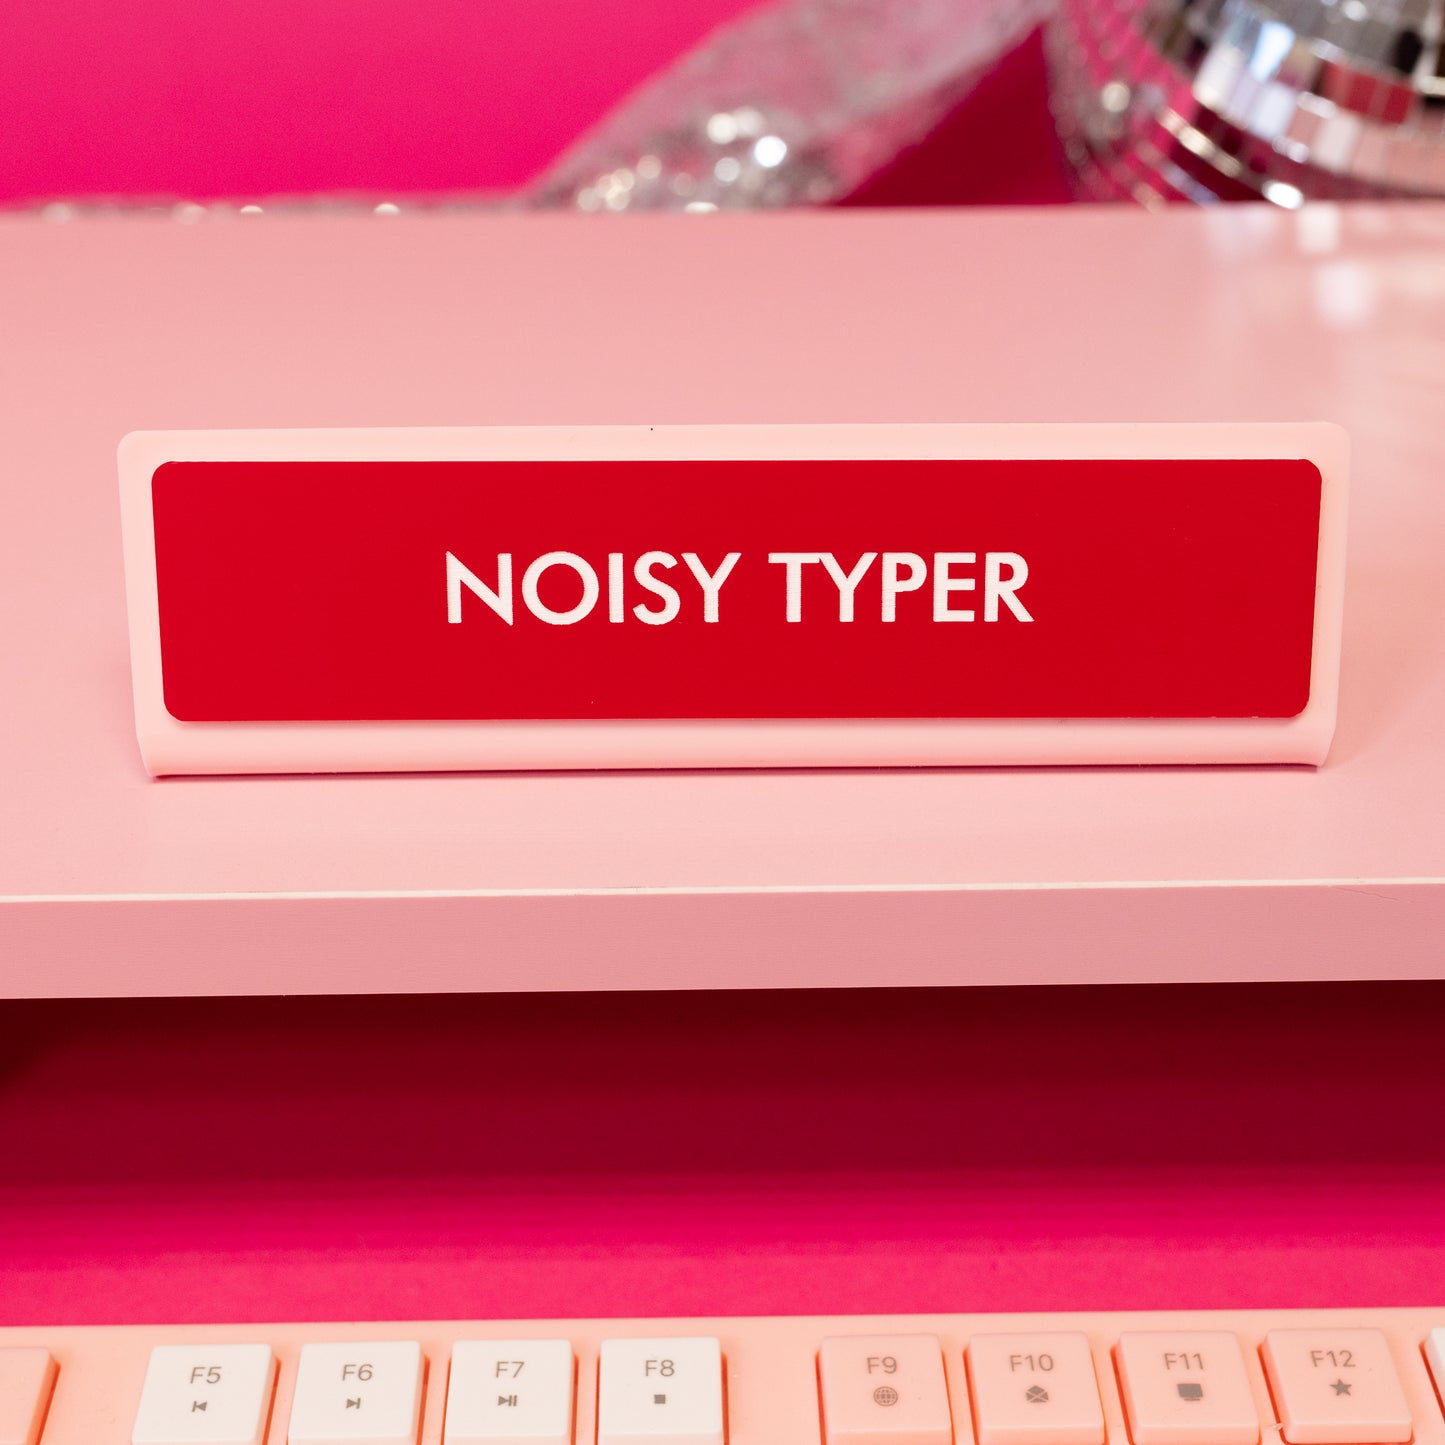 red and white noisy typer desk sign